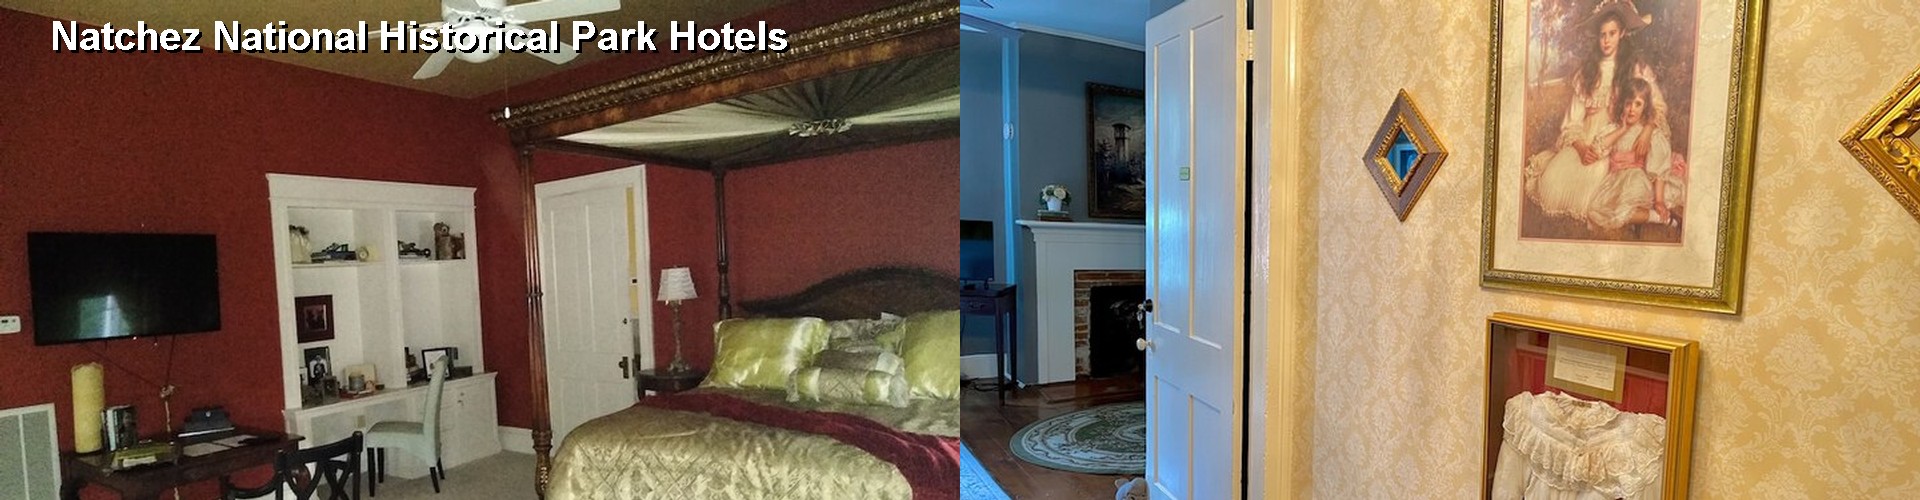 5 Best Hotels near Natchez National Historical Park